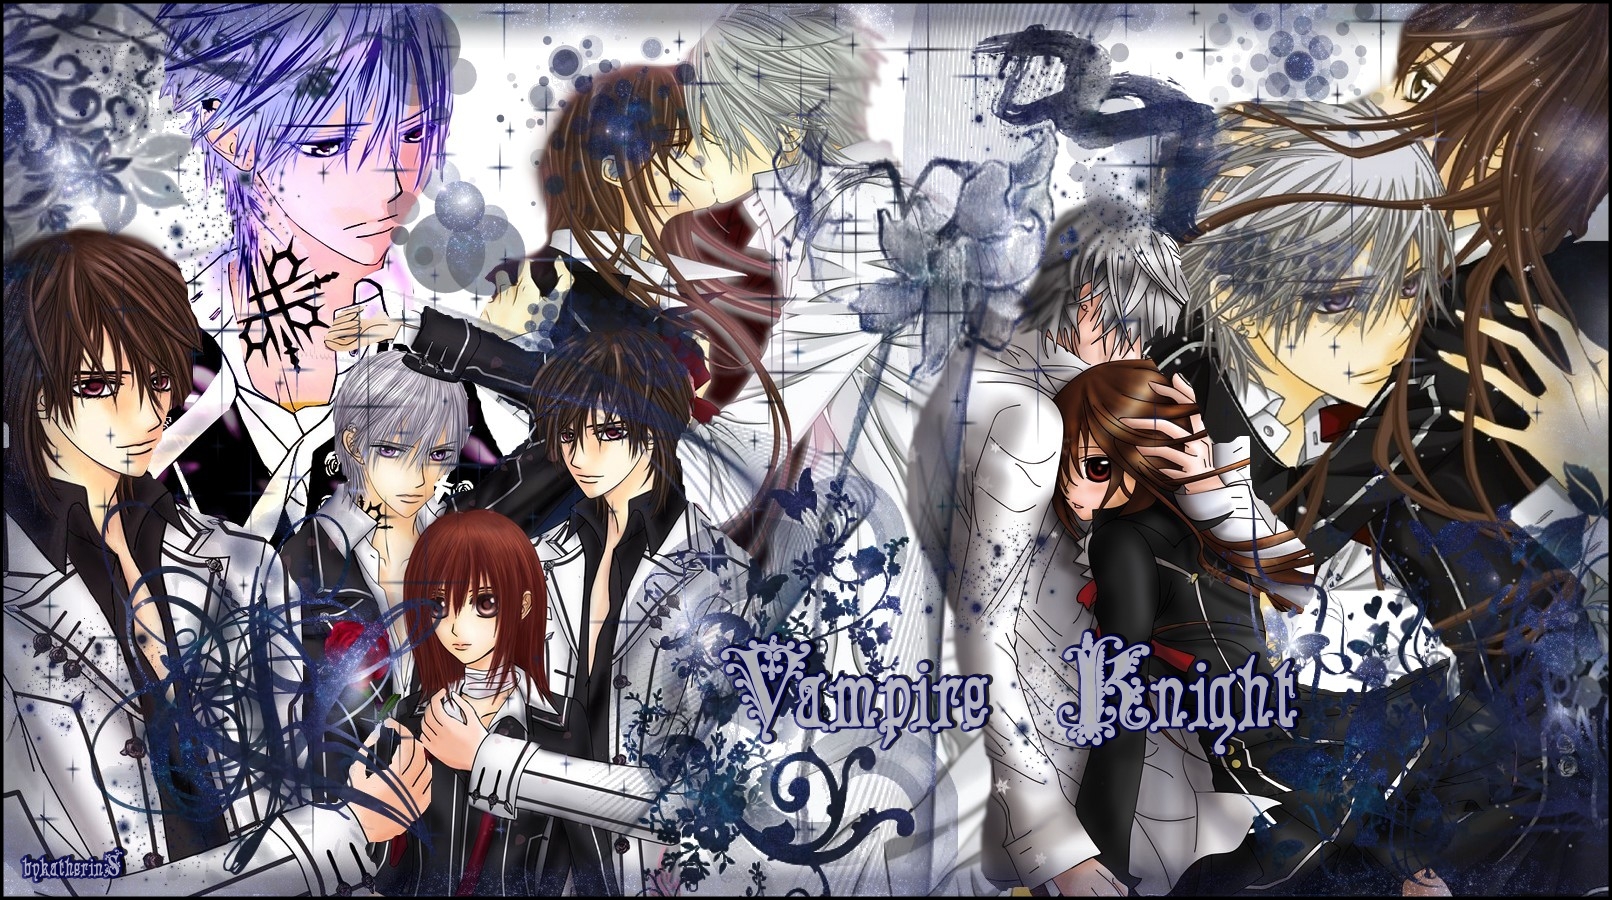 Vampire_Knight_anime_by_KatherinS.jpg